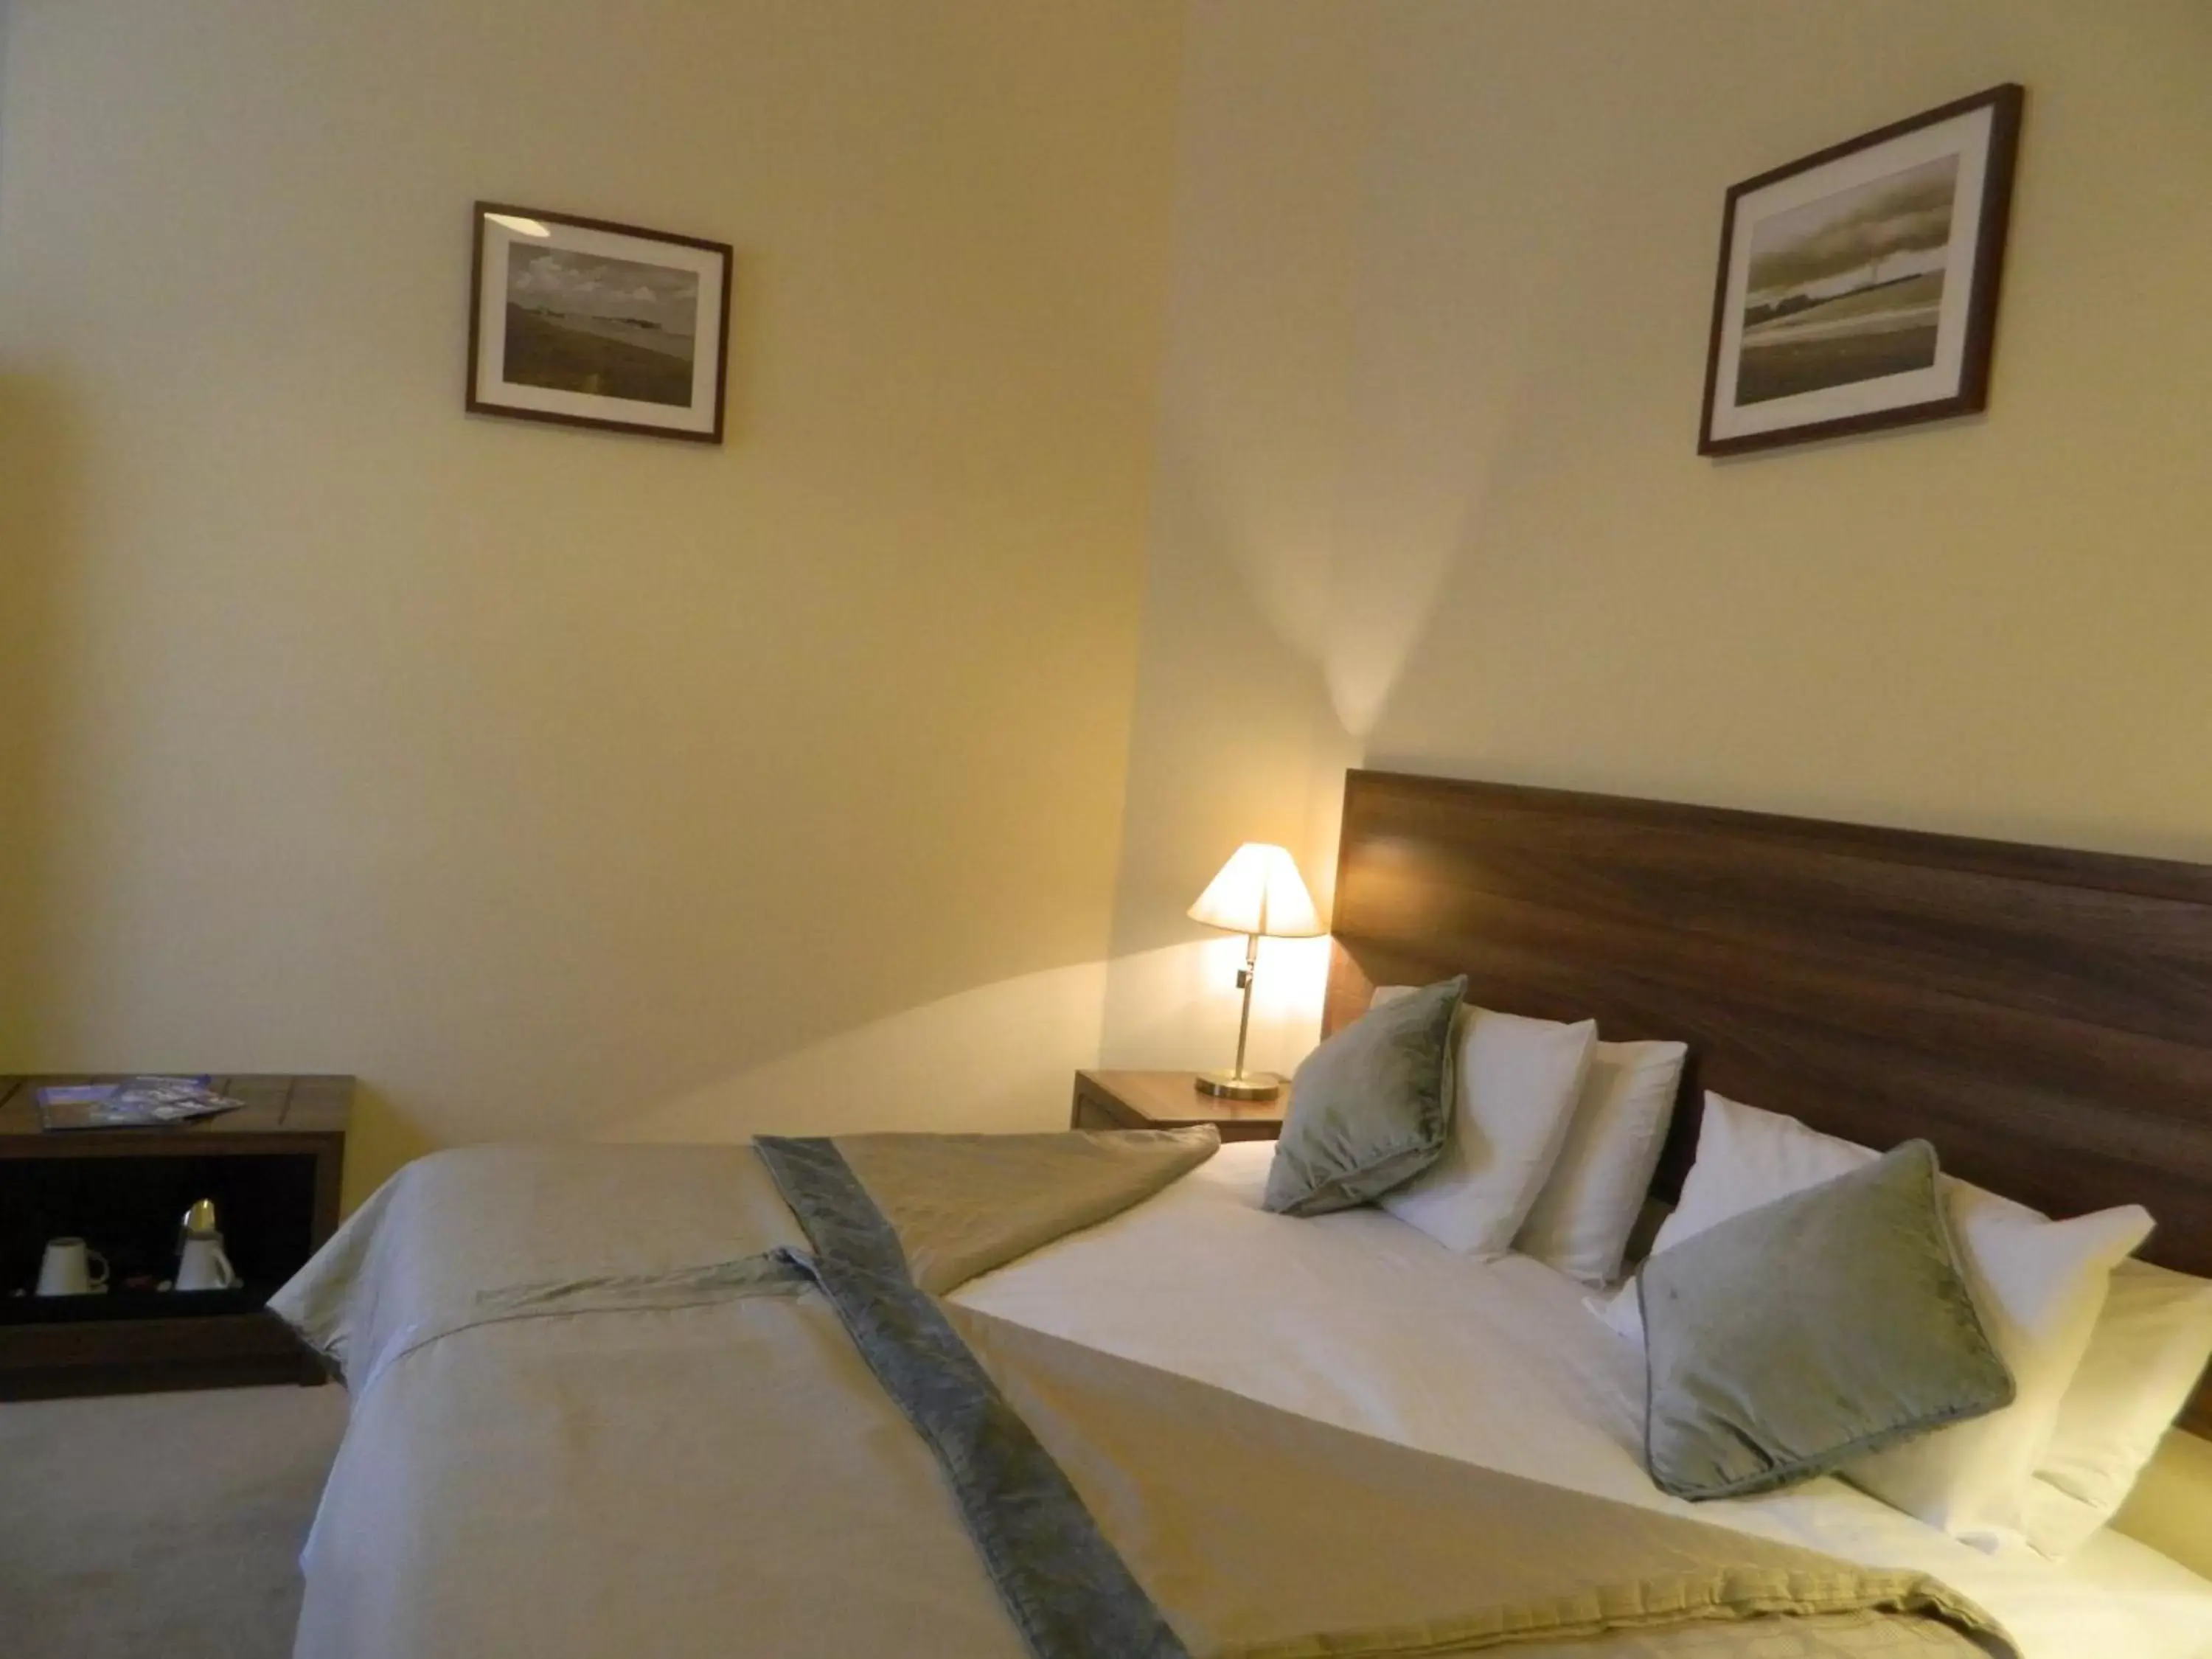 Bedroom, Room Photo in Weston Hotel